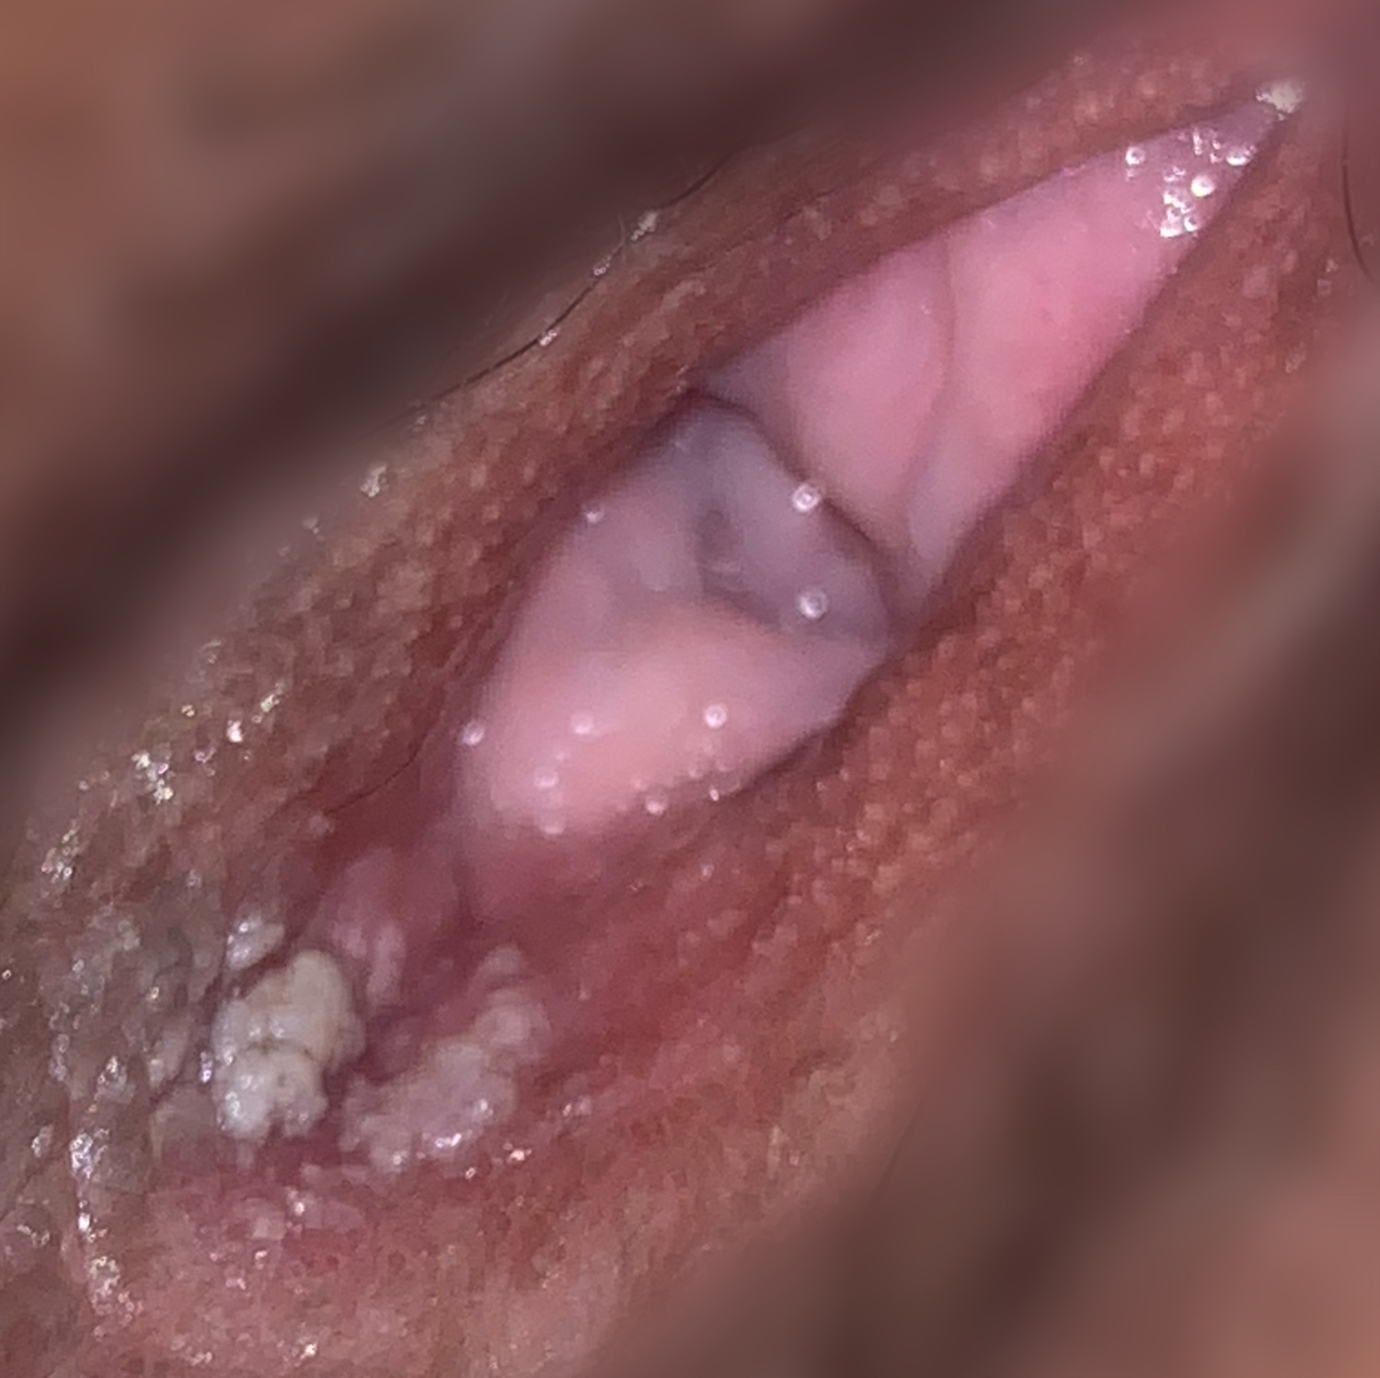 white spots inside vagina - nakednoyz.com.